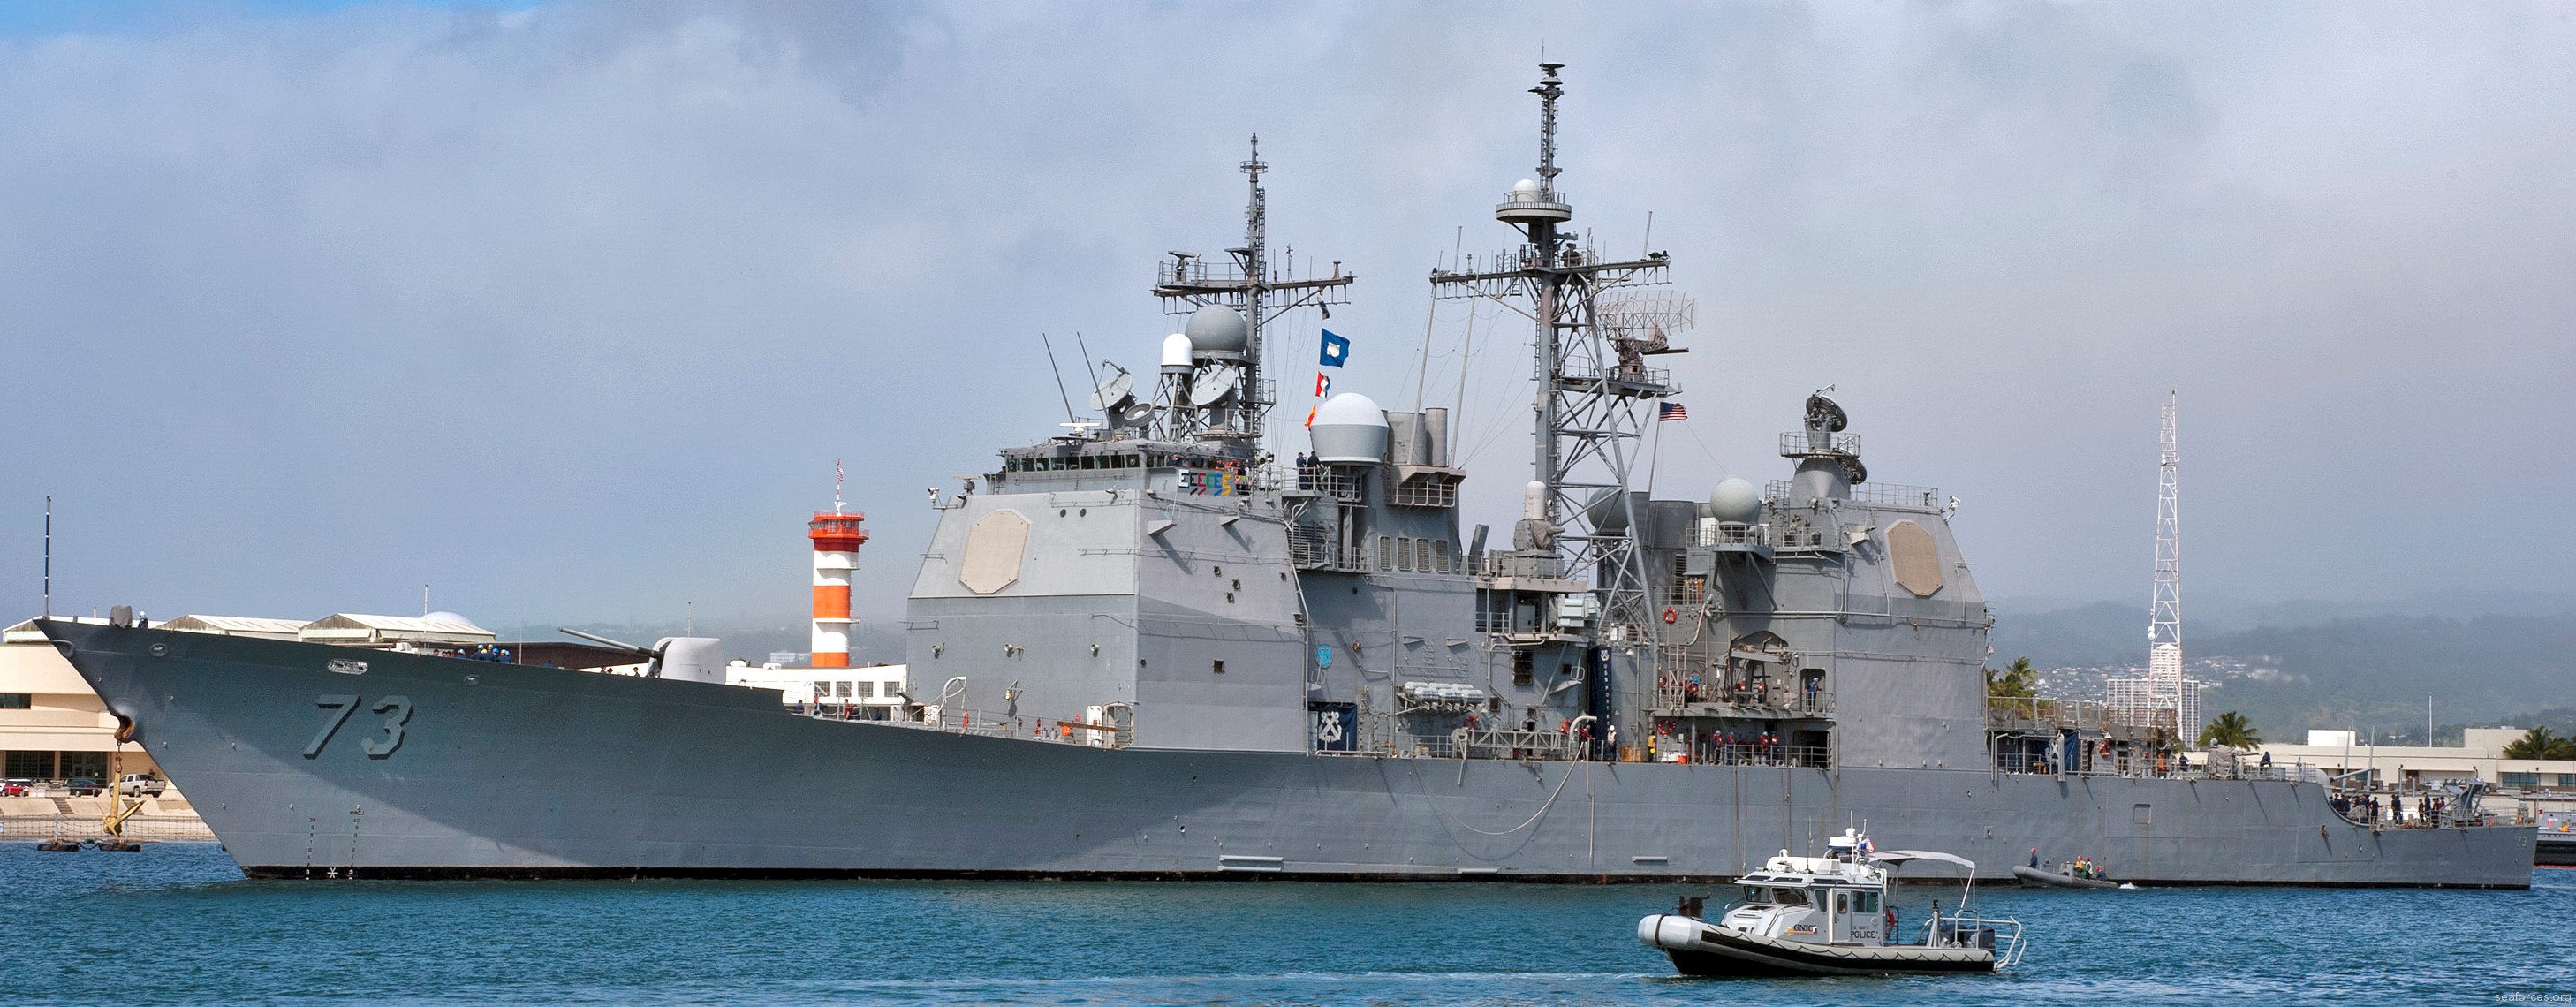 cg-73 uss port royal ticonderoga class guided missile cruiser navy 12